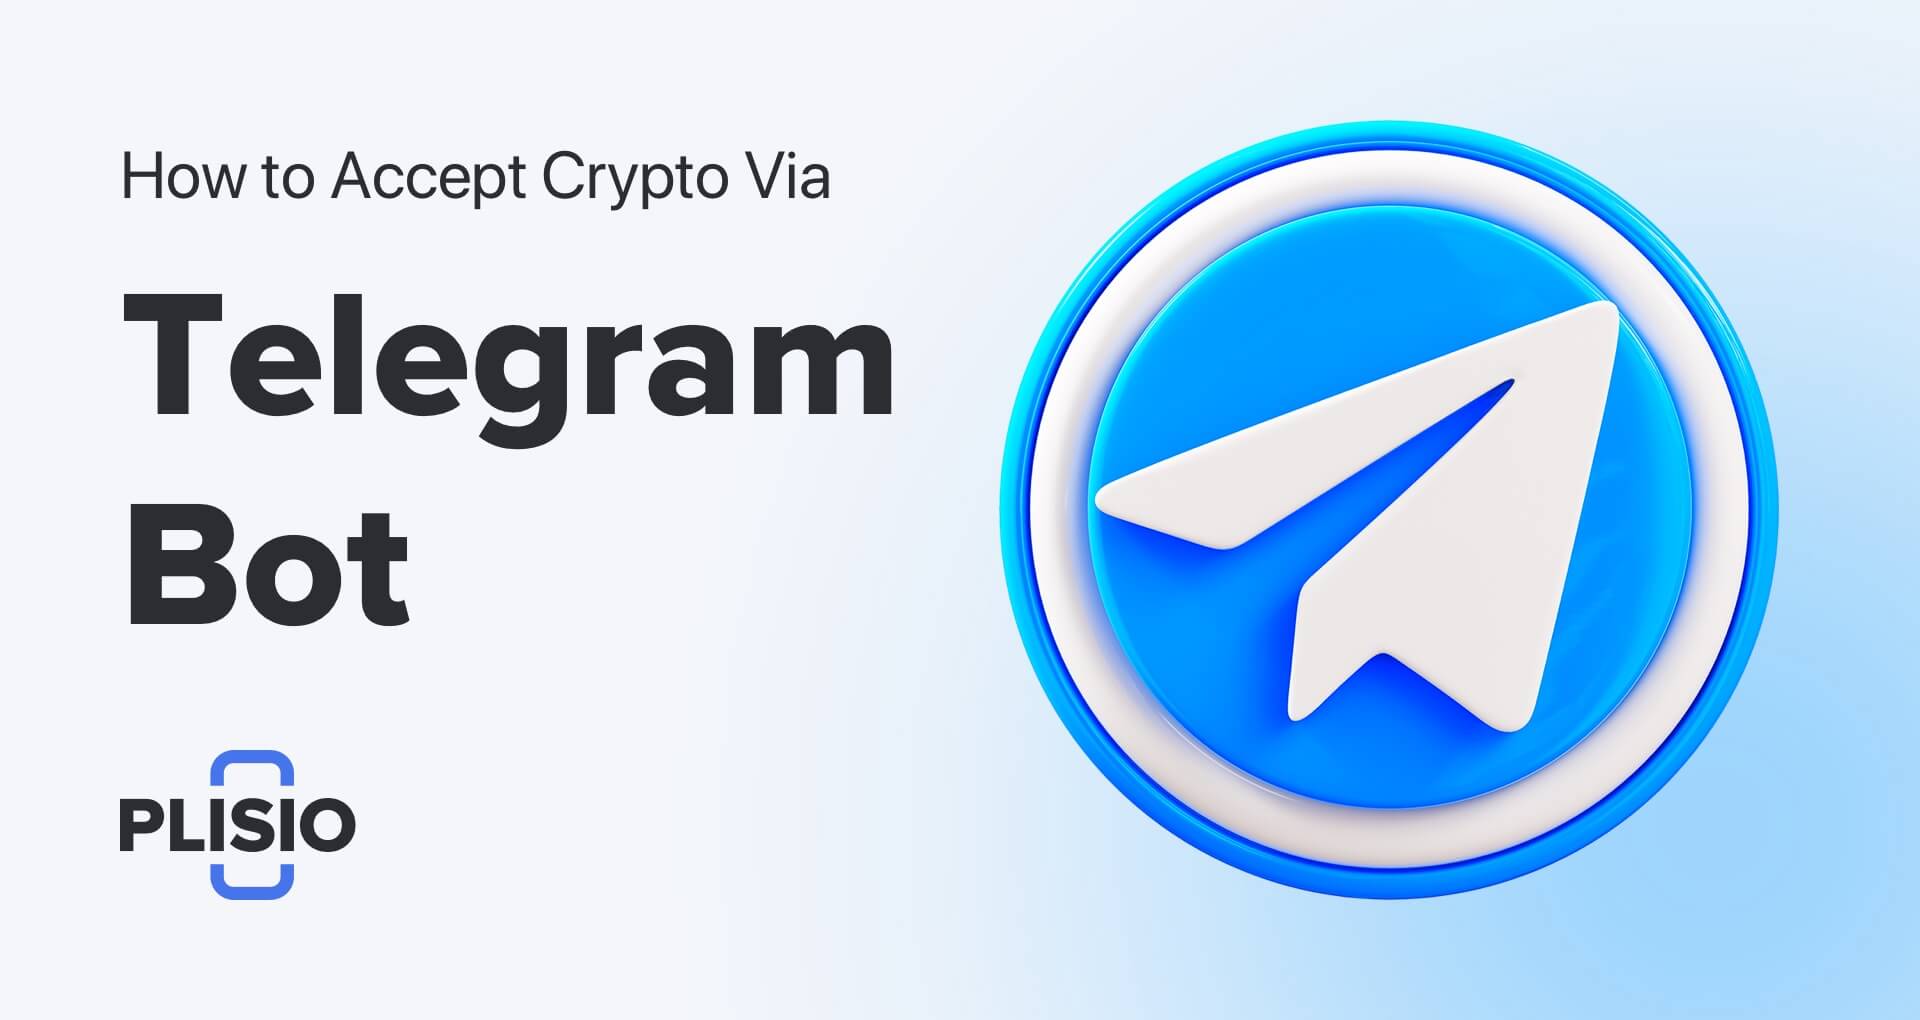 + Top Crypto Telegram Channels List